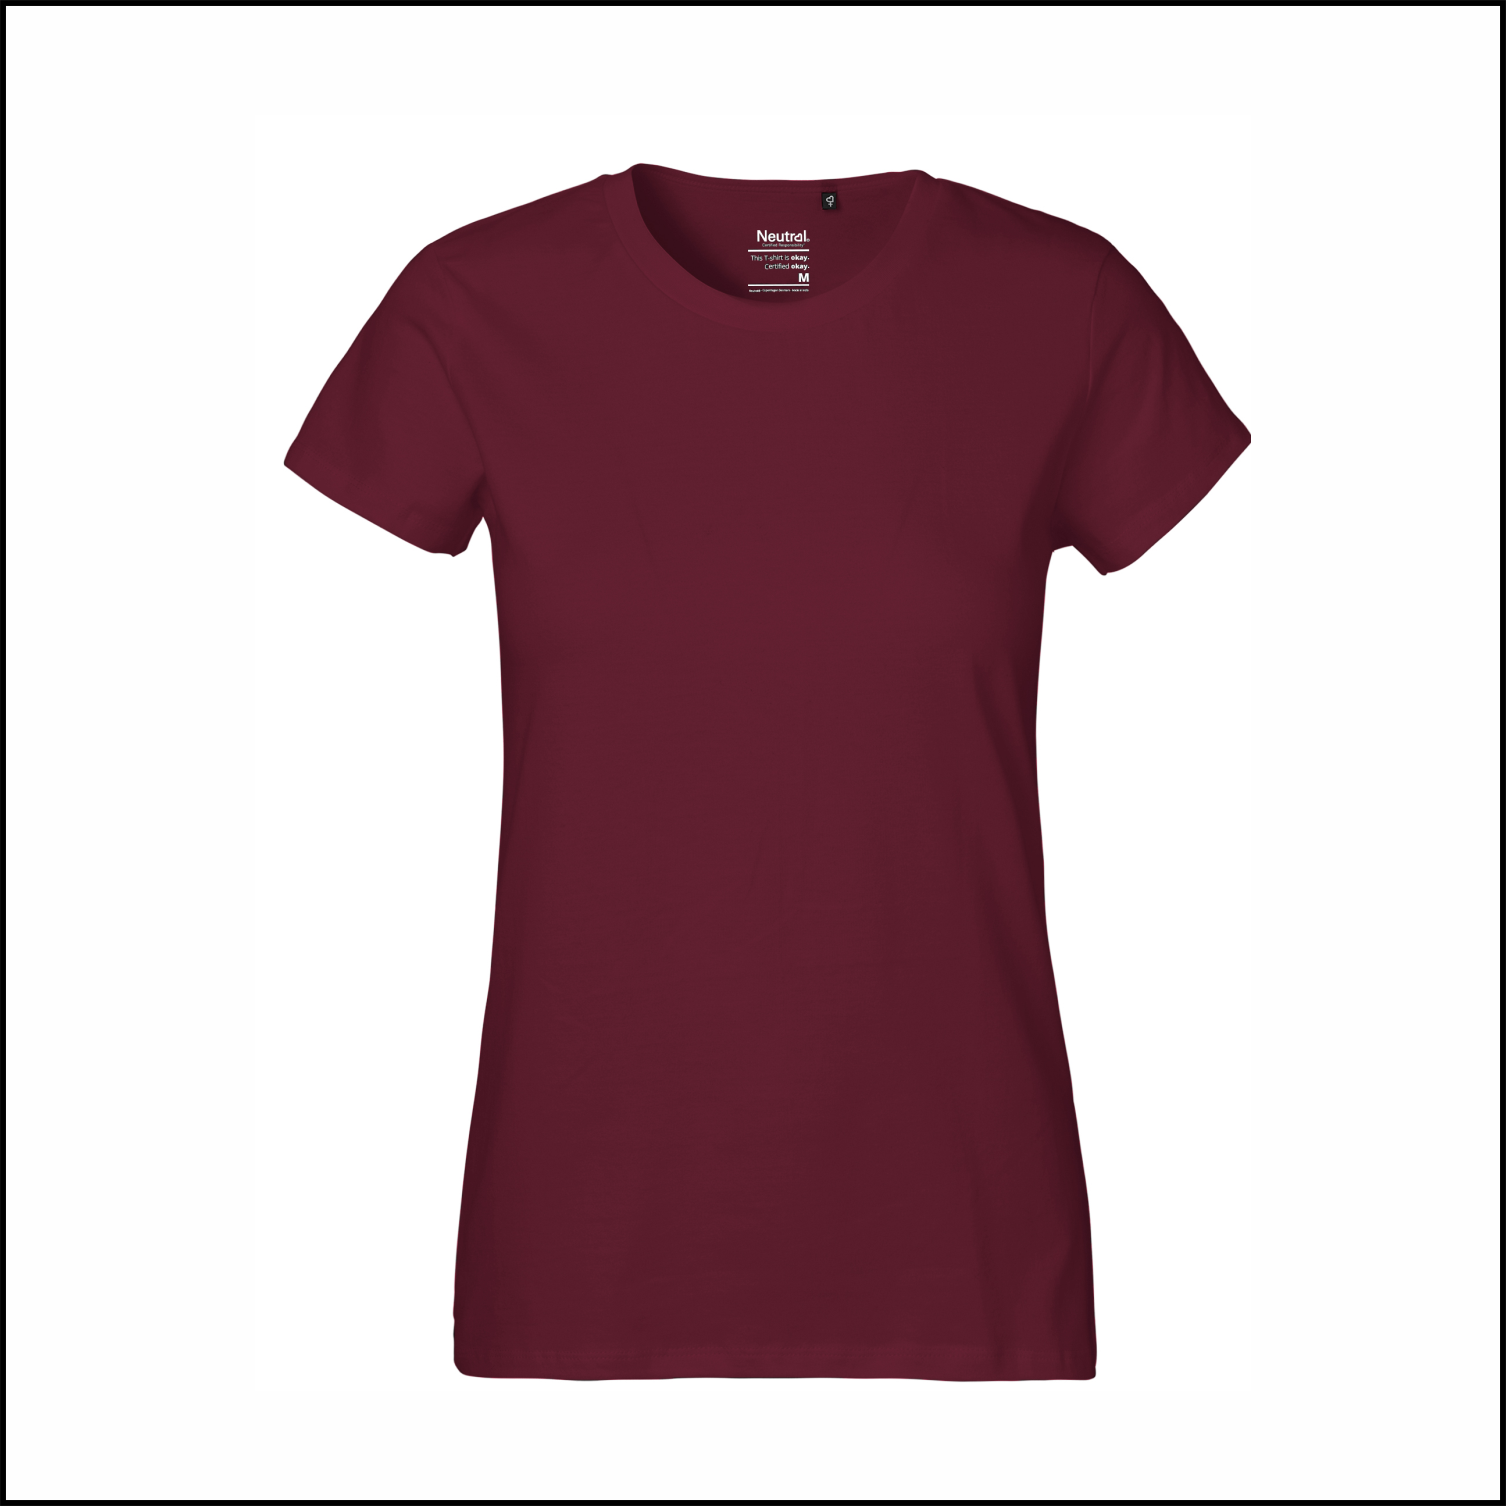 Damen T-shirt, 100% fairtrade zertifizierte Biobaumwolle